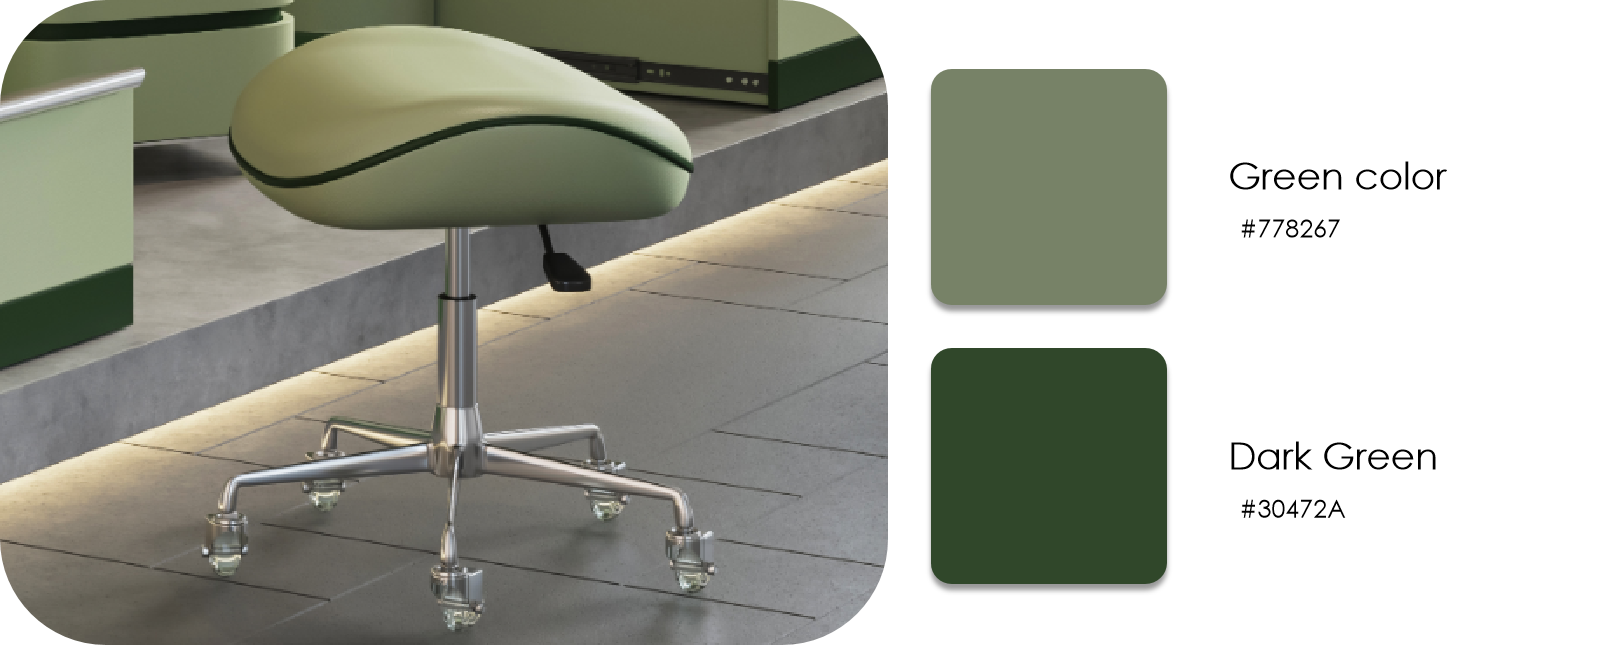 Glorall green color salon furniture saddle stool chair